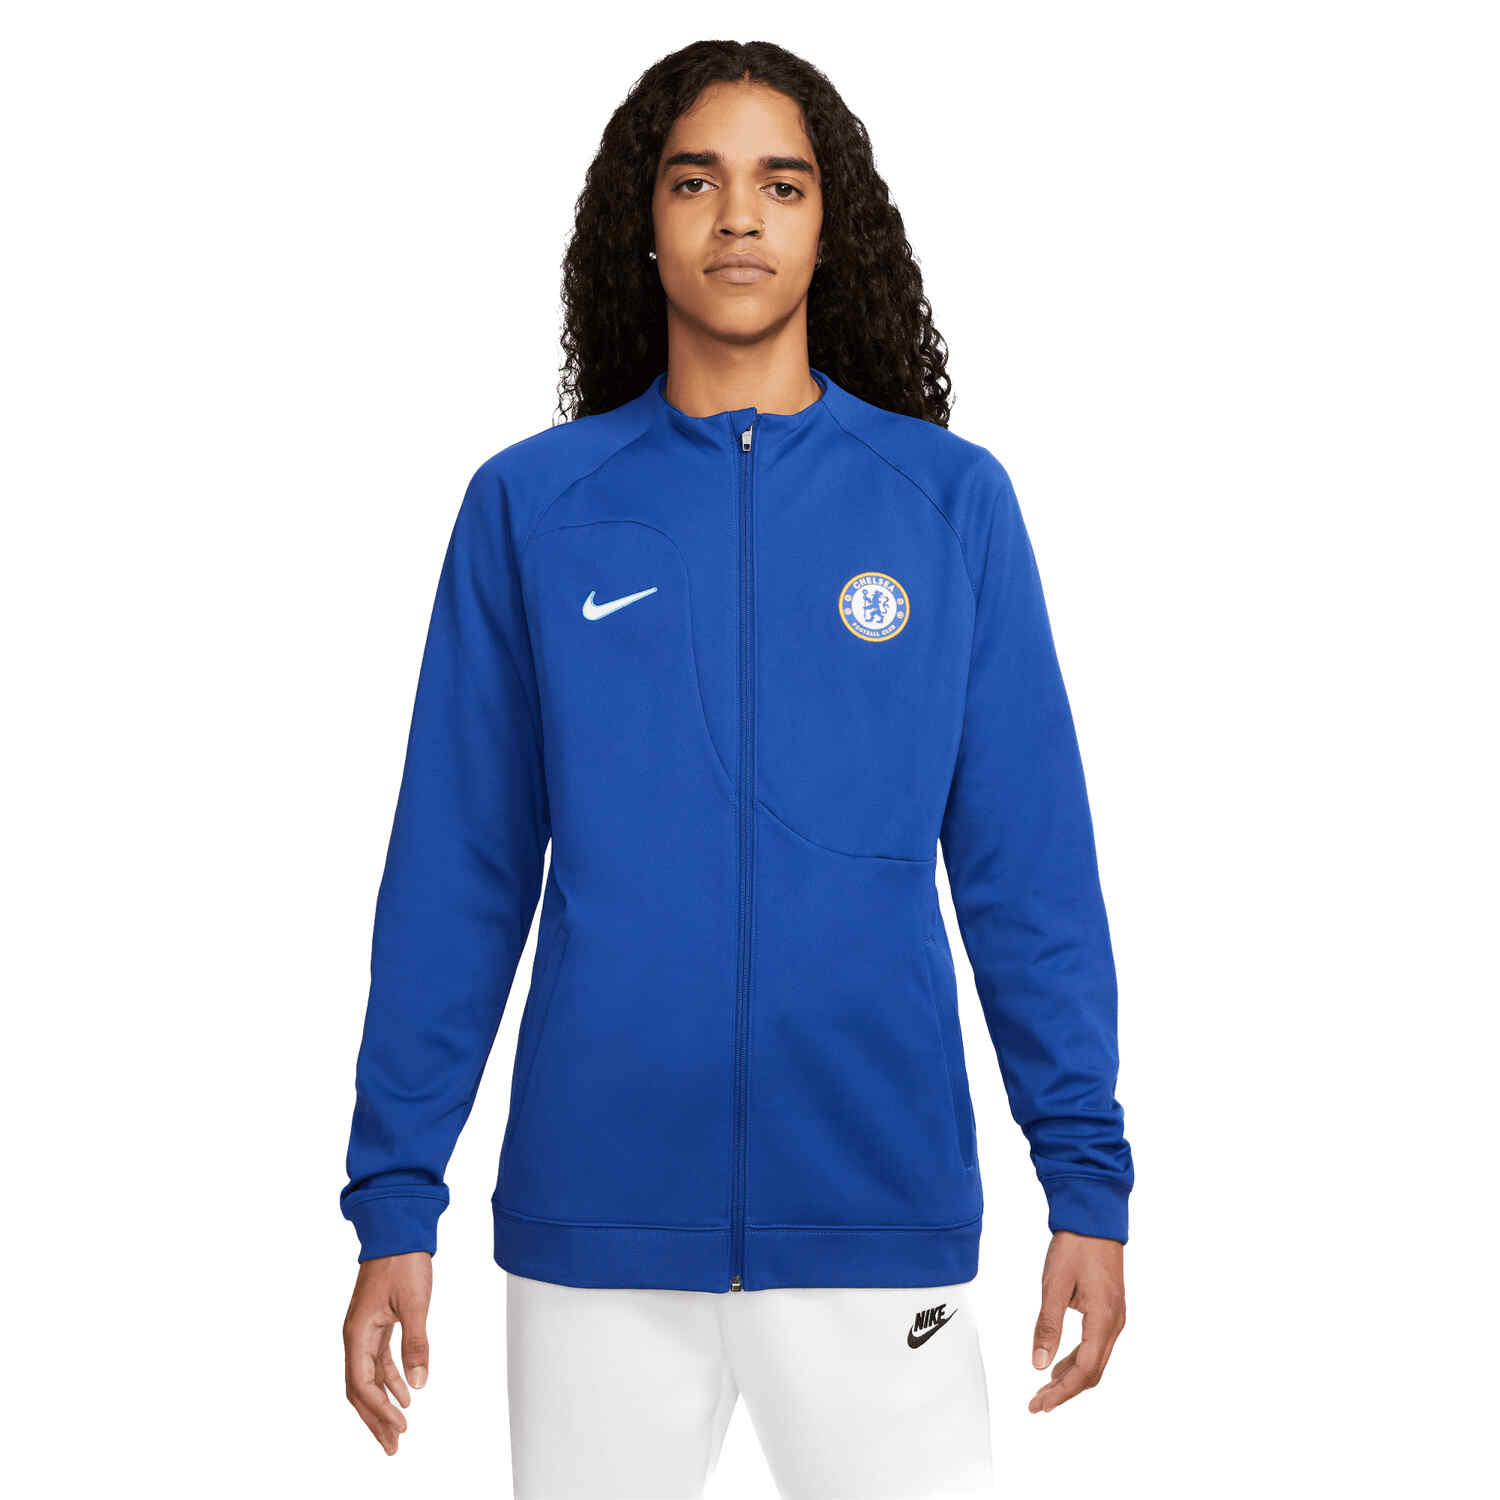 Leed Gelijkenis willekeurig Nike Chelsea Anthem Lifestyle Jacket - Rush Blue & White - Soccer Master